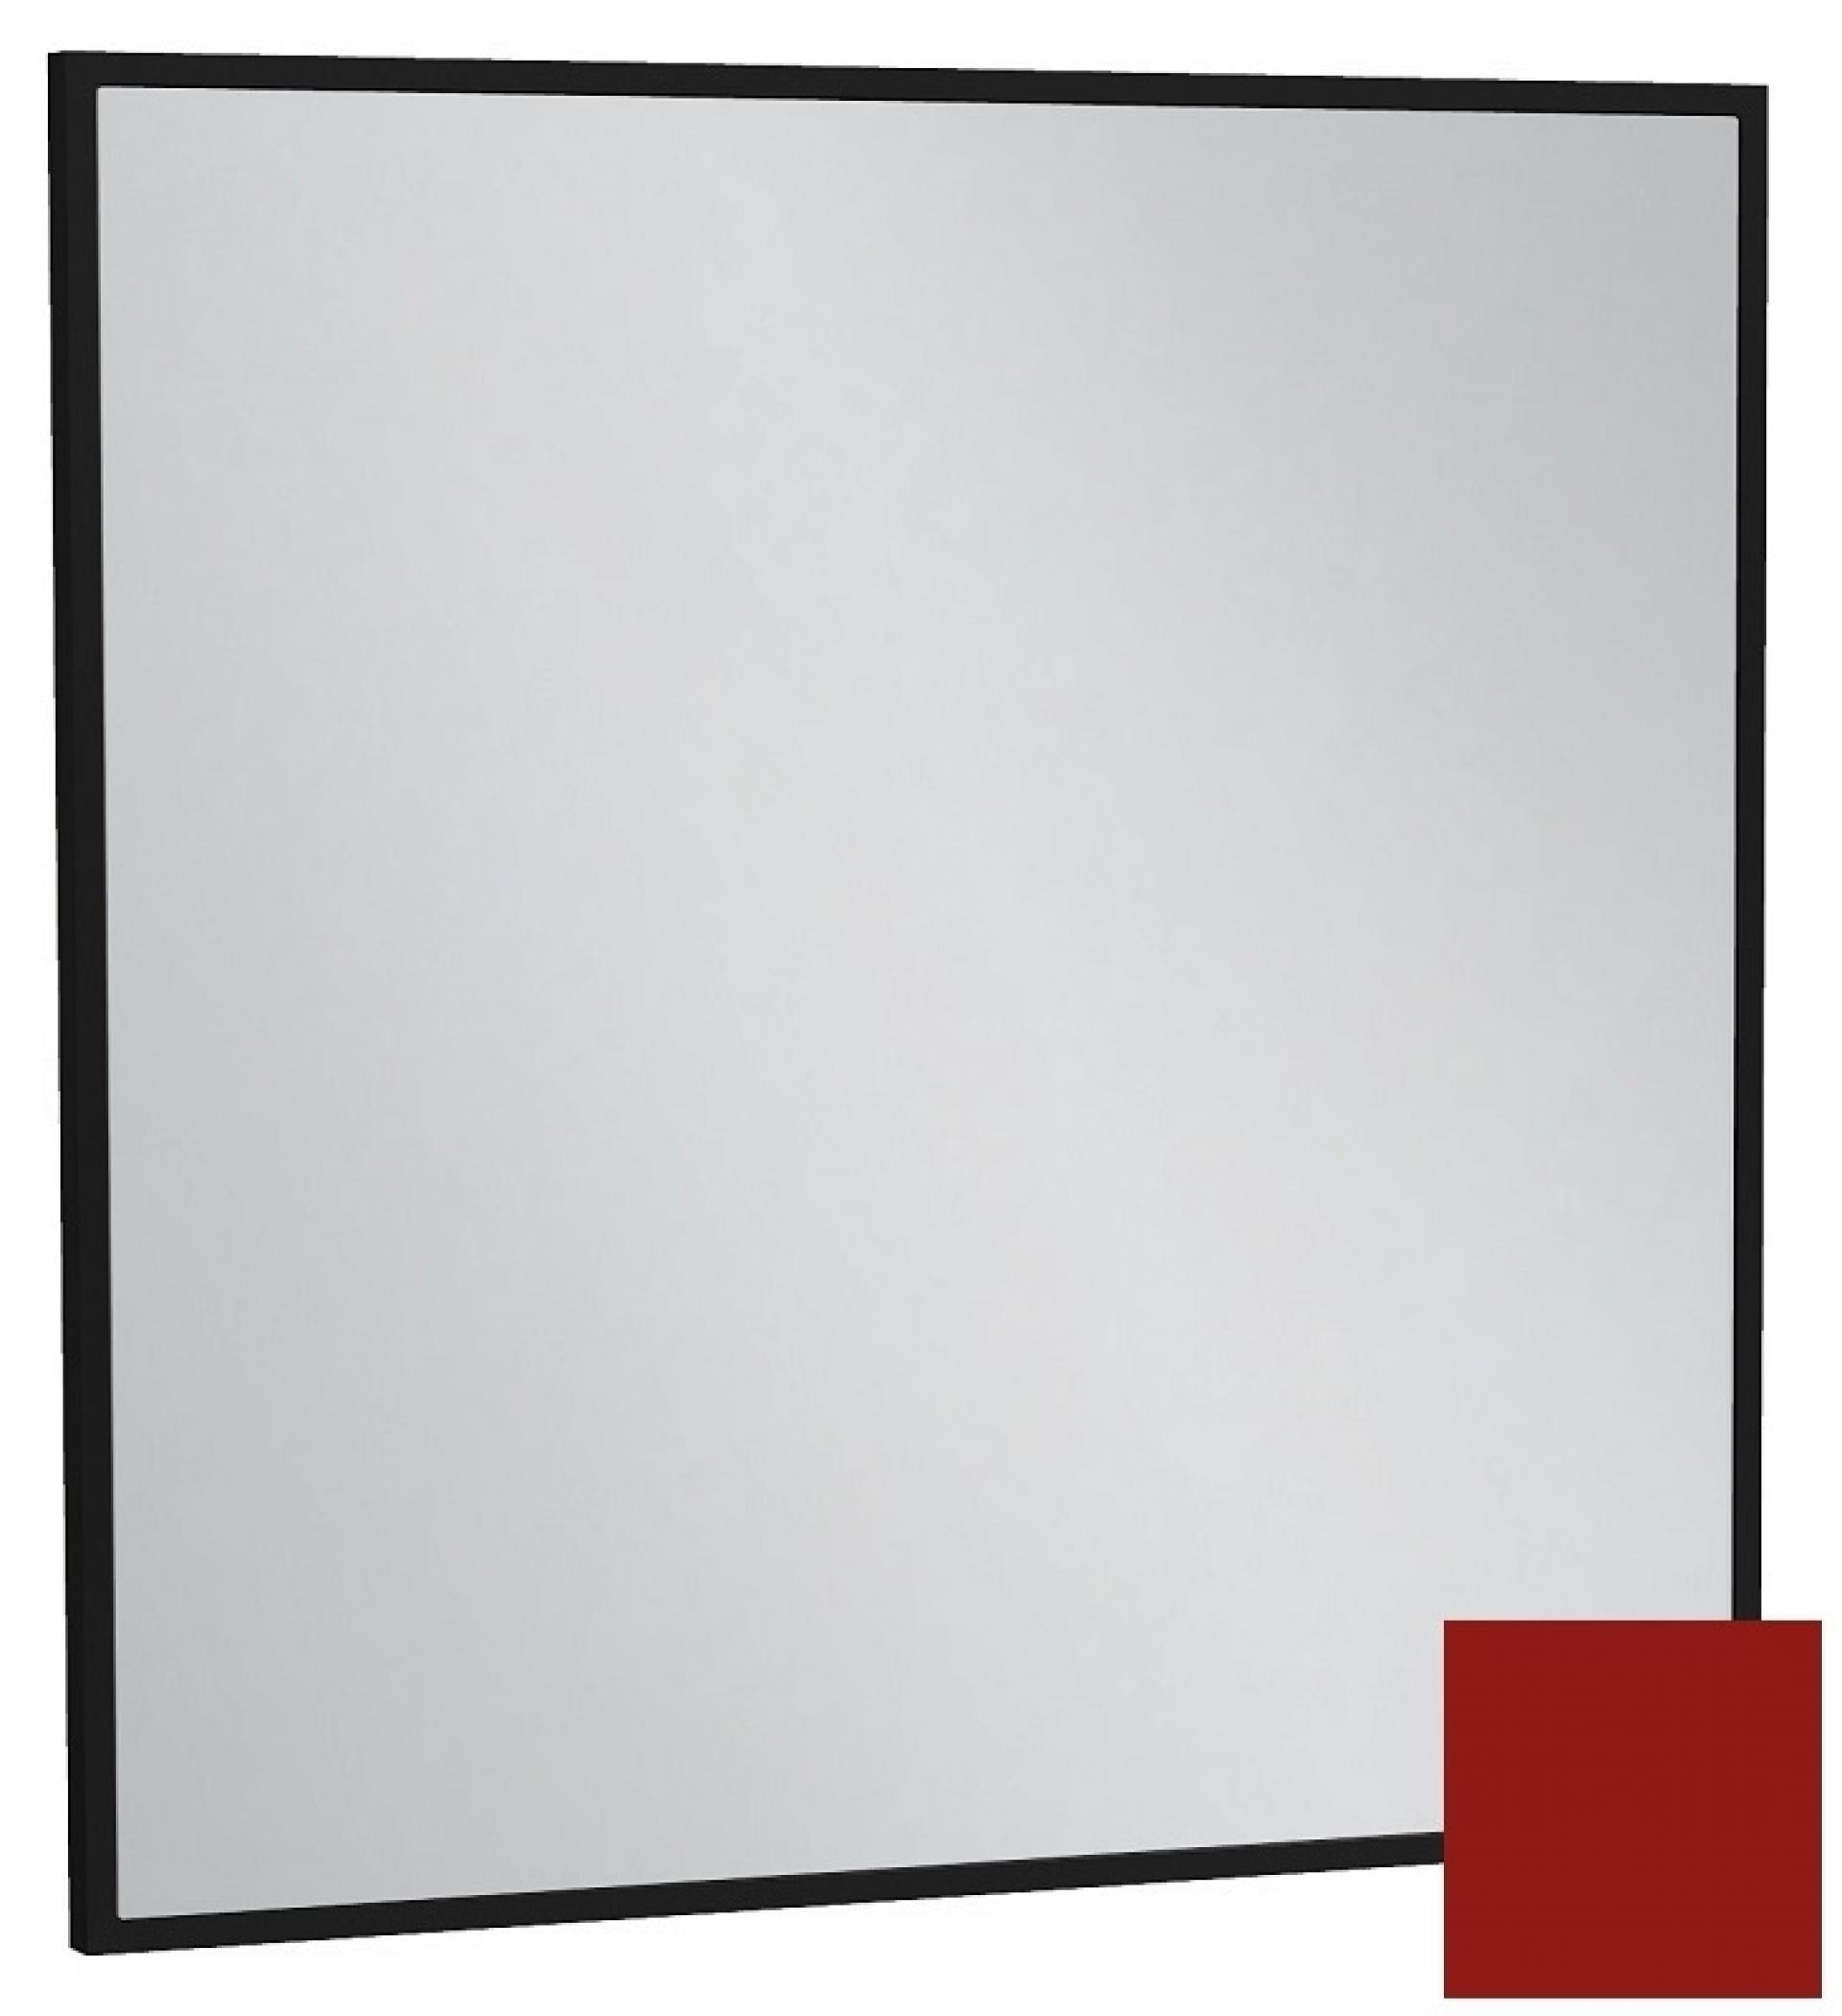 Зеркало 60 см Jacob Delafon Silhouette EB1423-S08, лакированная рама темно-красный сатин